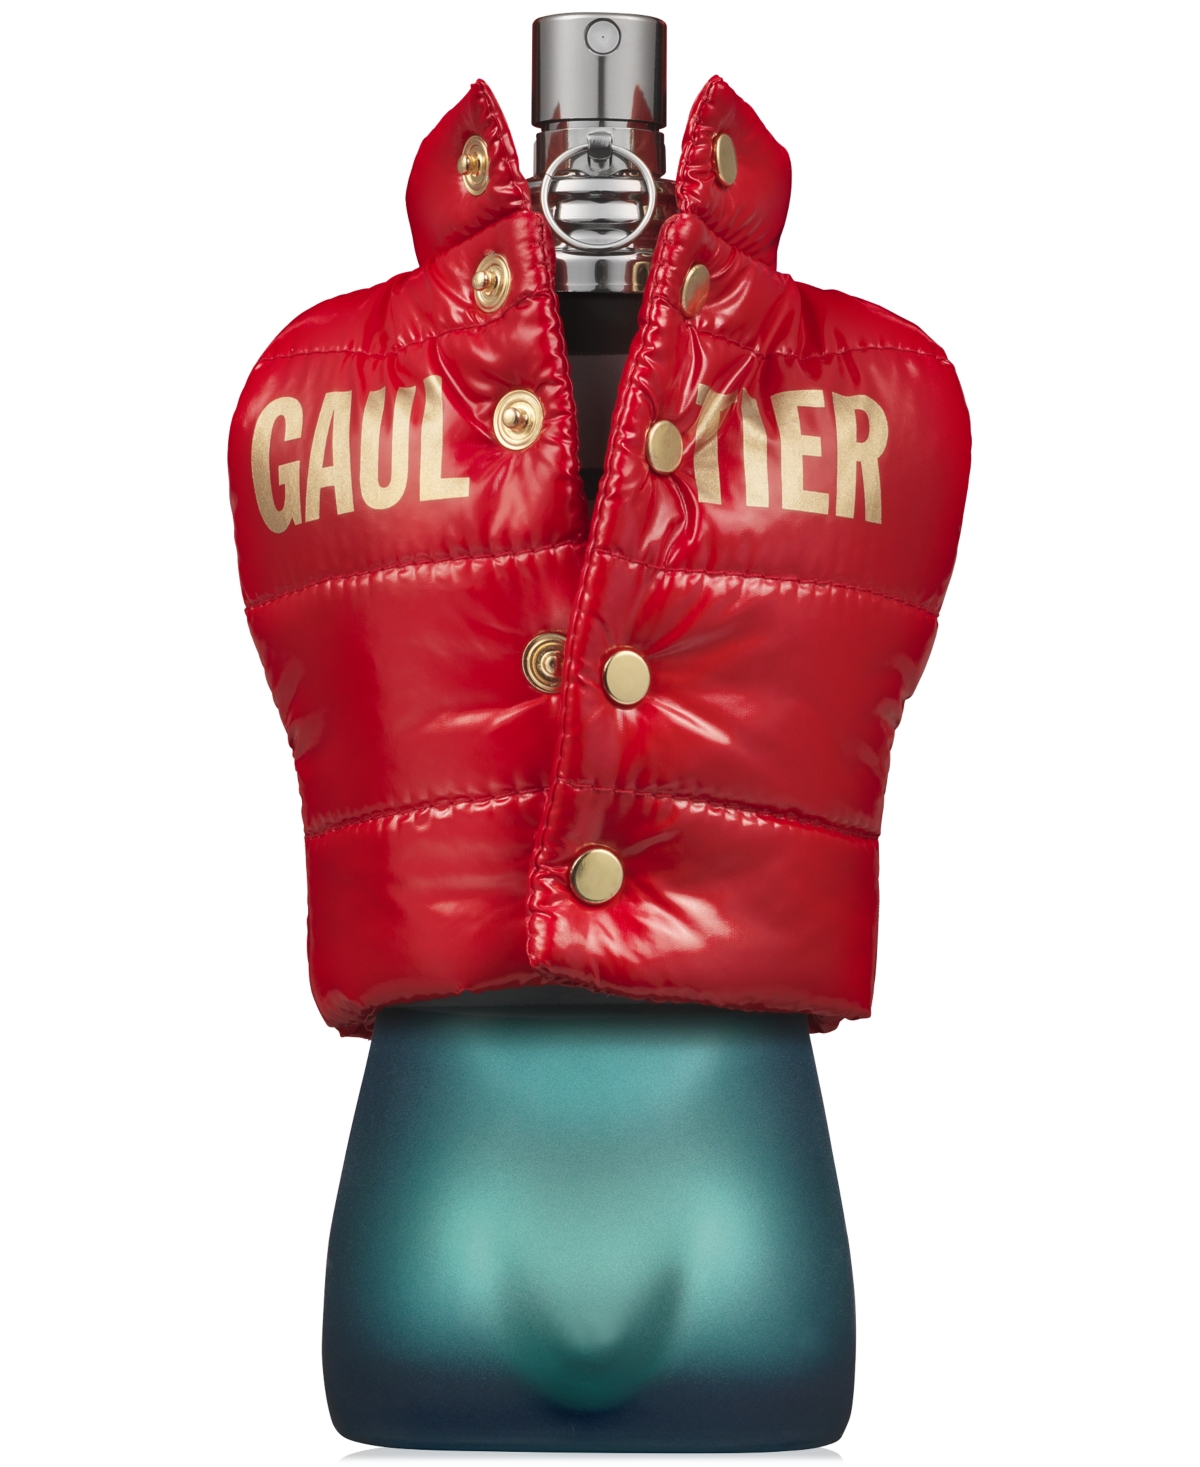 Jean Paul Gaultier Men's Le Male Eau De Toilette Holiday Collector Edition Spray, 4.2 Oz.